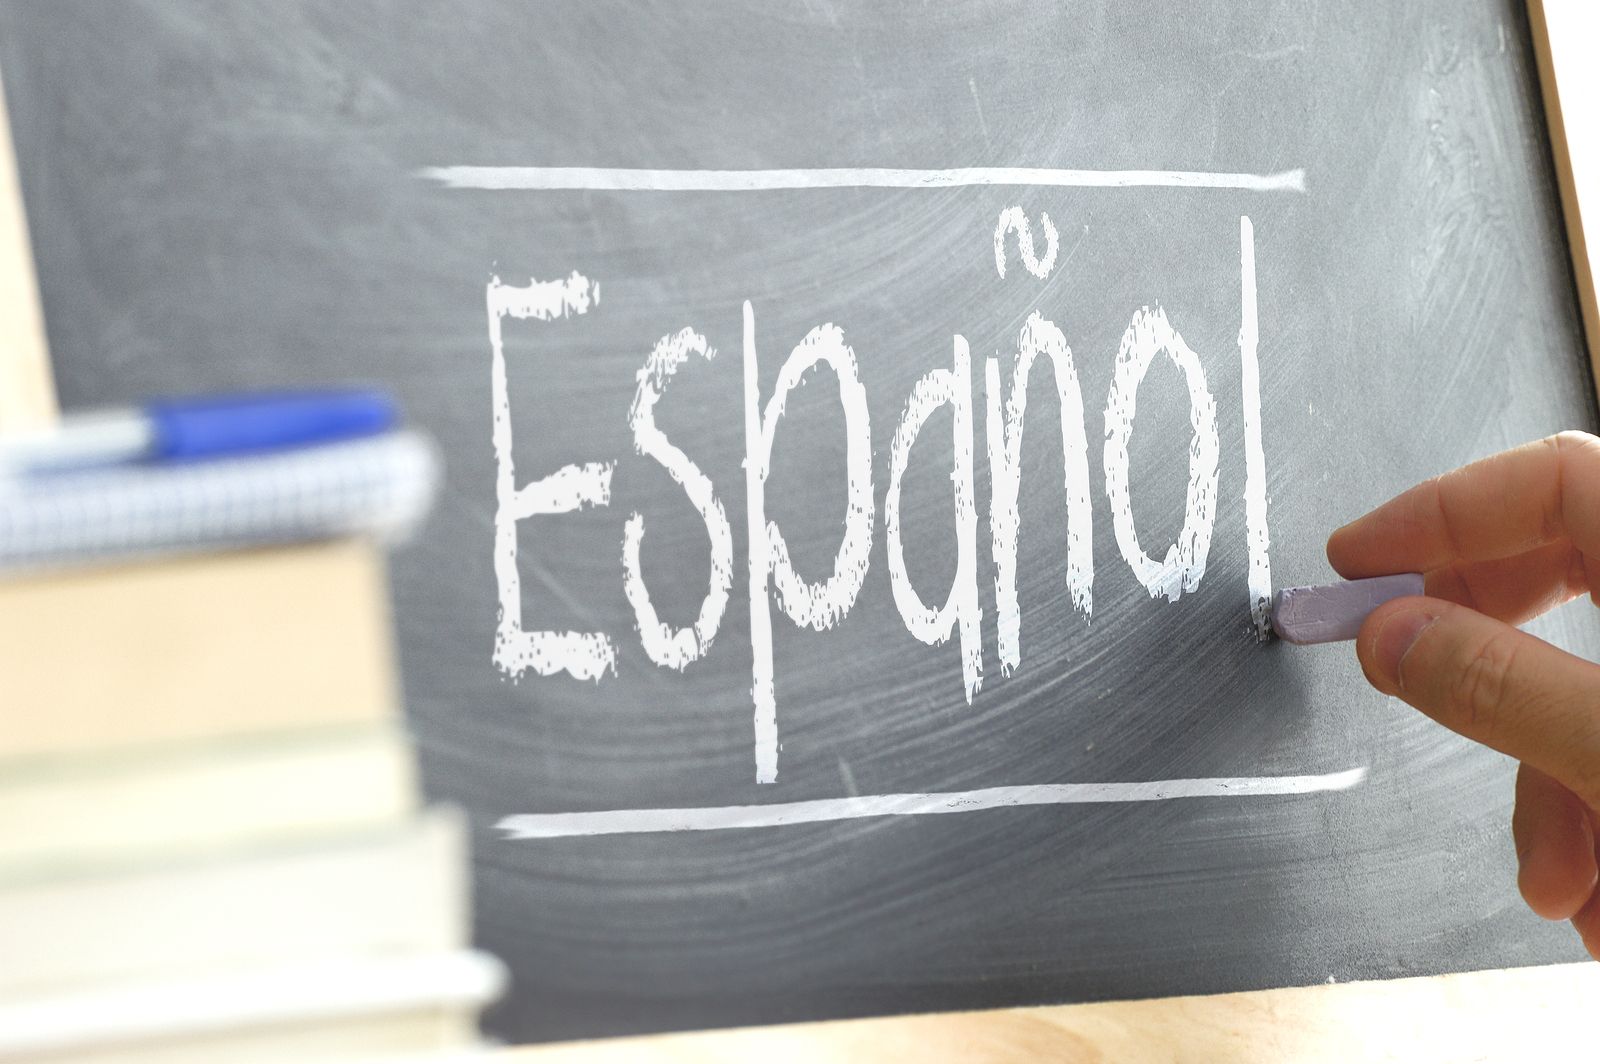 La riqueza del idioma español